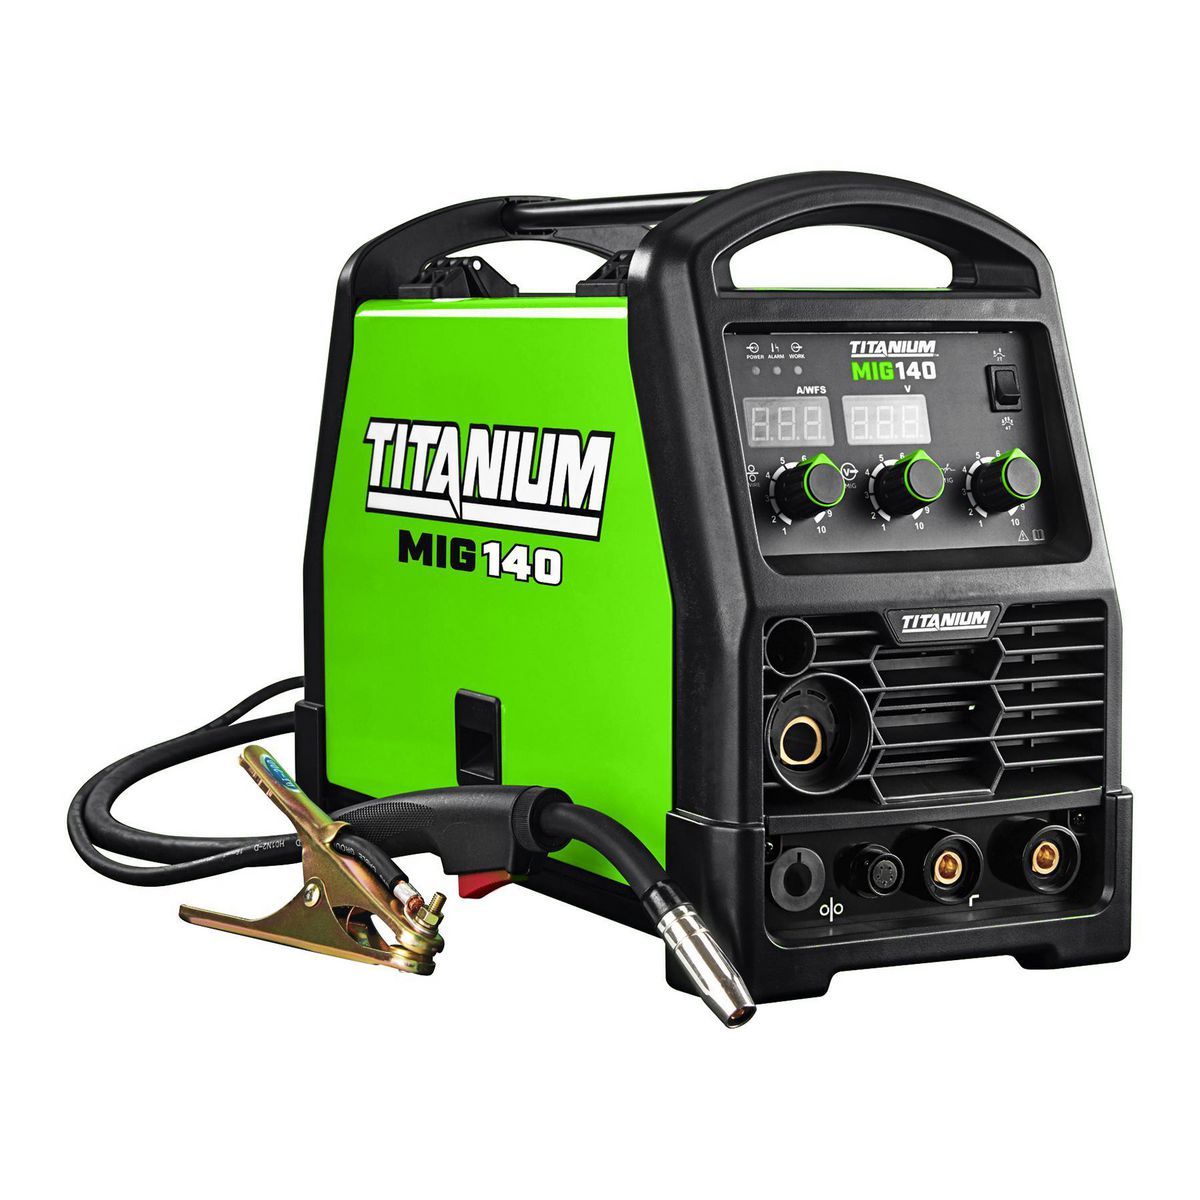 TITANIUM MIG 140 Professional Welder with 120V Input